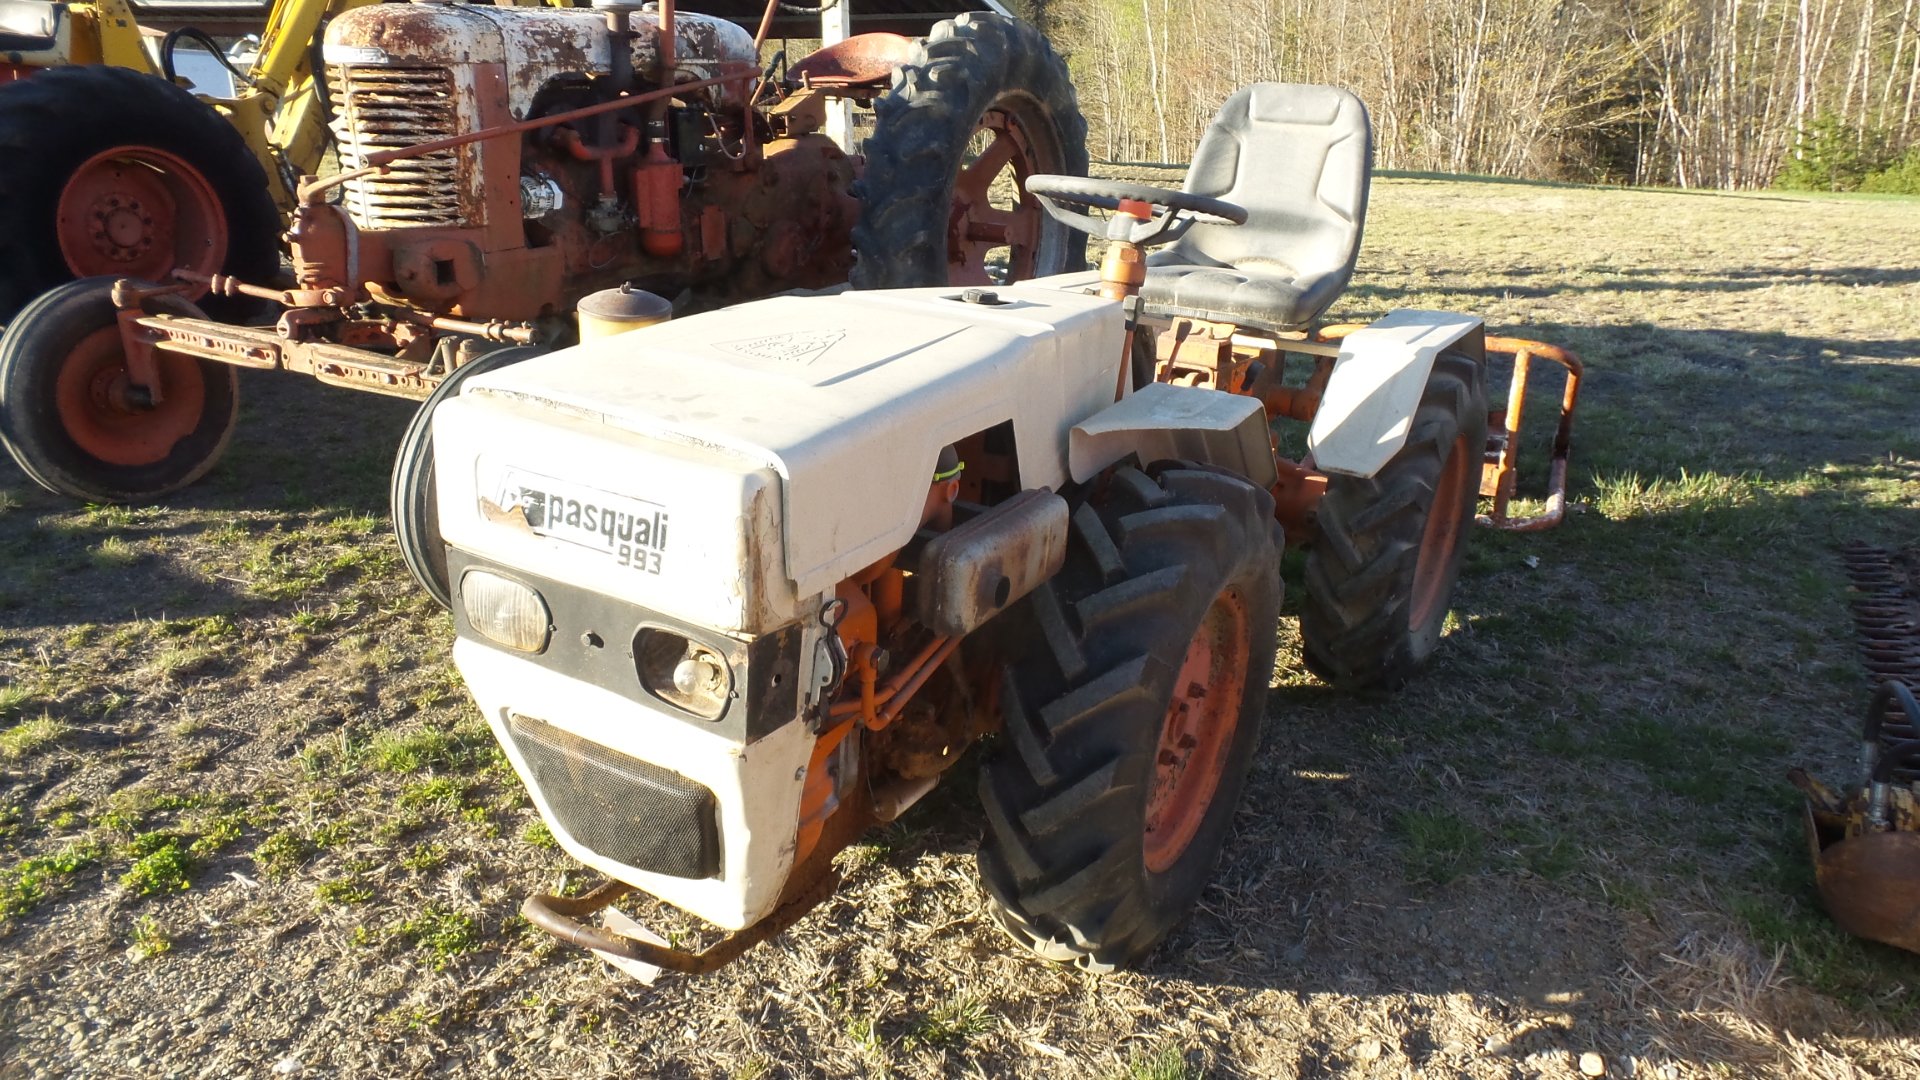 Pasquali 993 4X4 Tractor